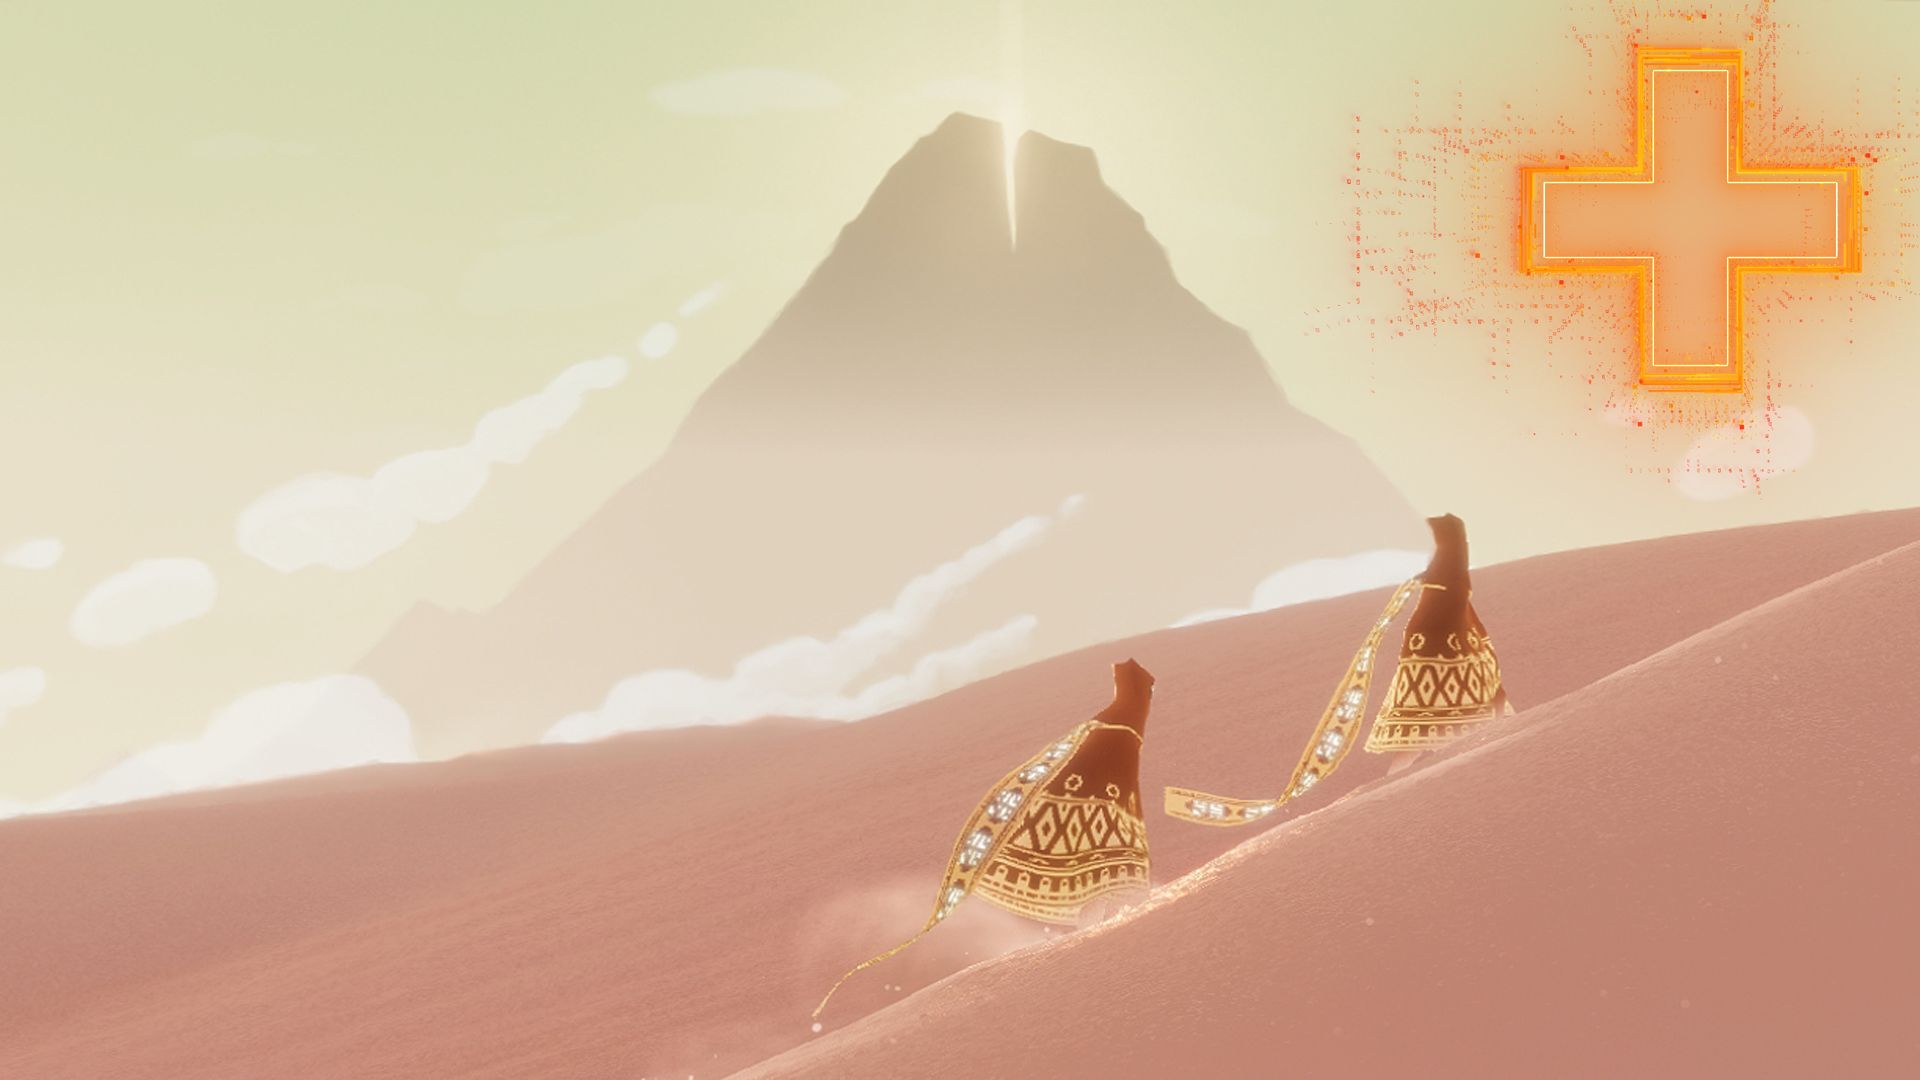 Джорни игра. Journey игра. Journey (игра, 2012). Journey пустыня ps4 Скриншоты thatgamecompany. Джорни путешествие игра.